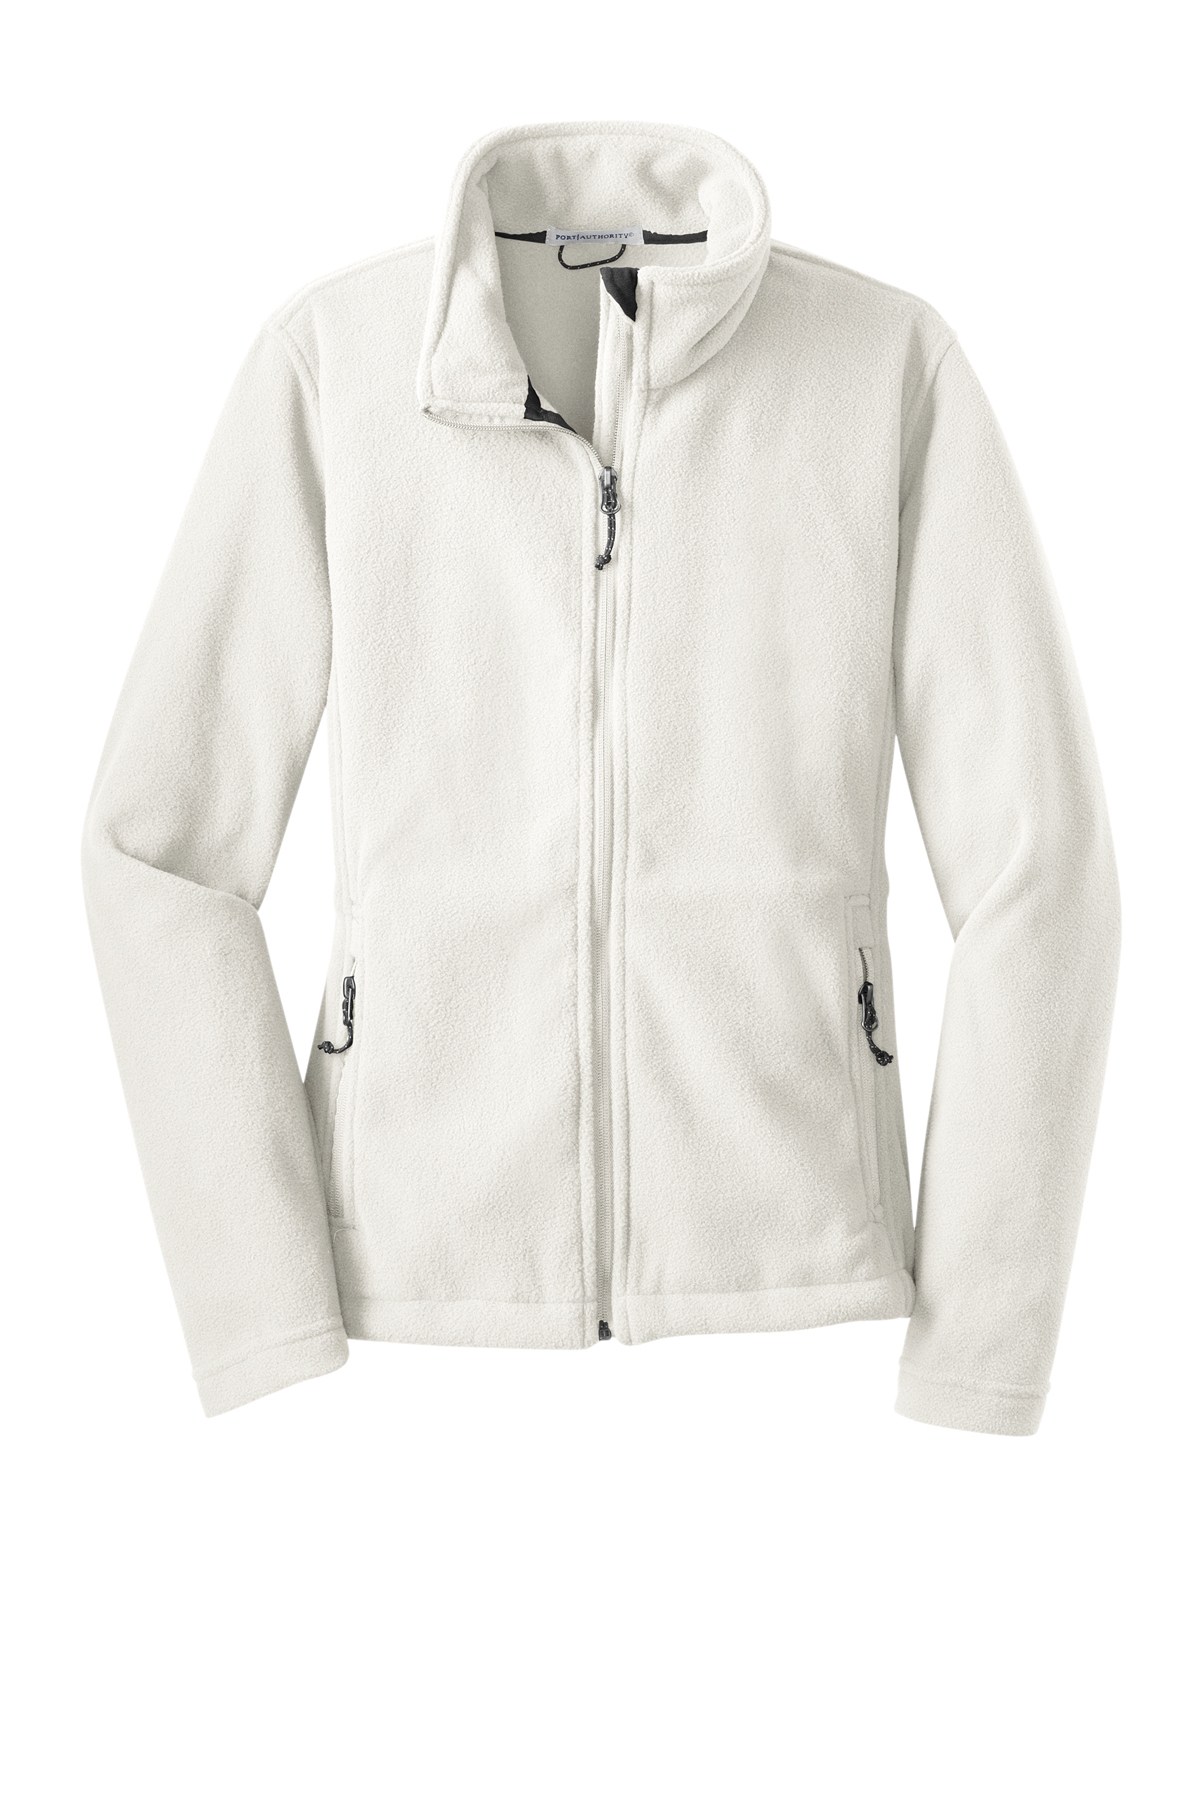 VA Port Authority® Ladies Value Fleece Jacket - L217 – Forever 6ix Apparel